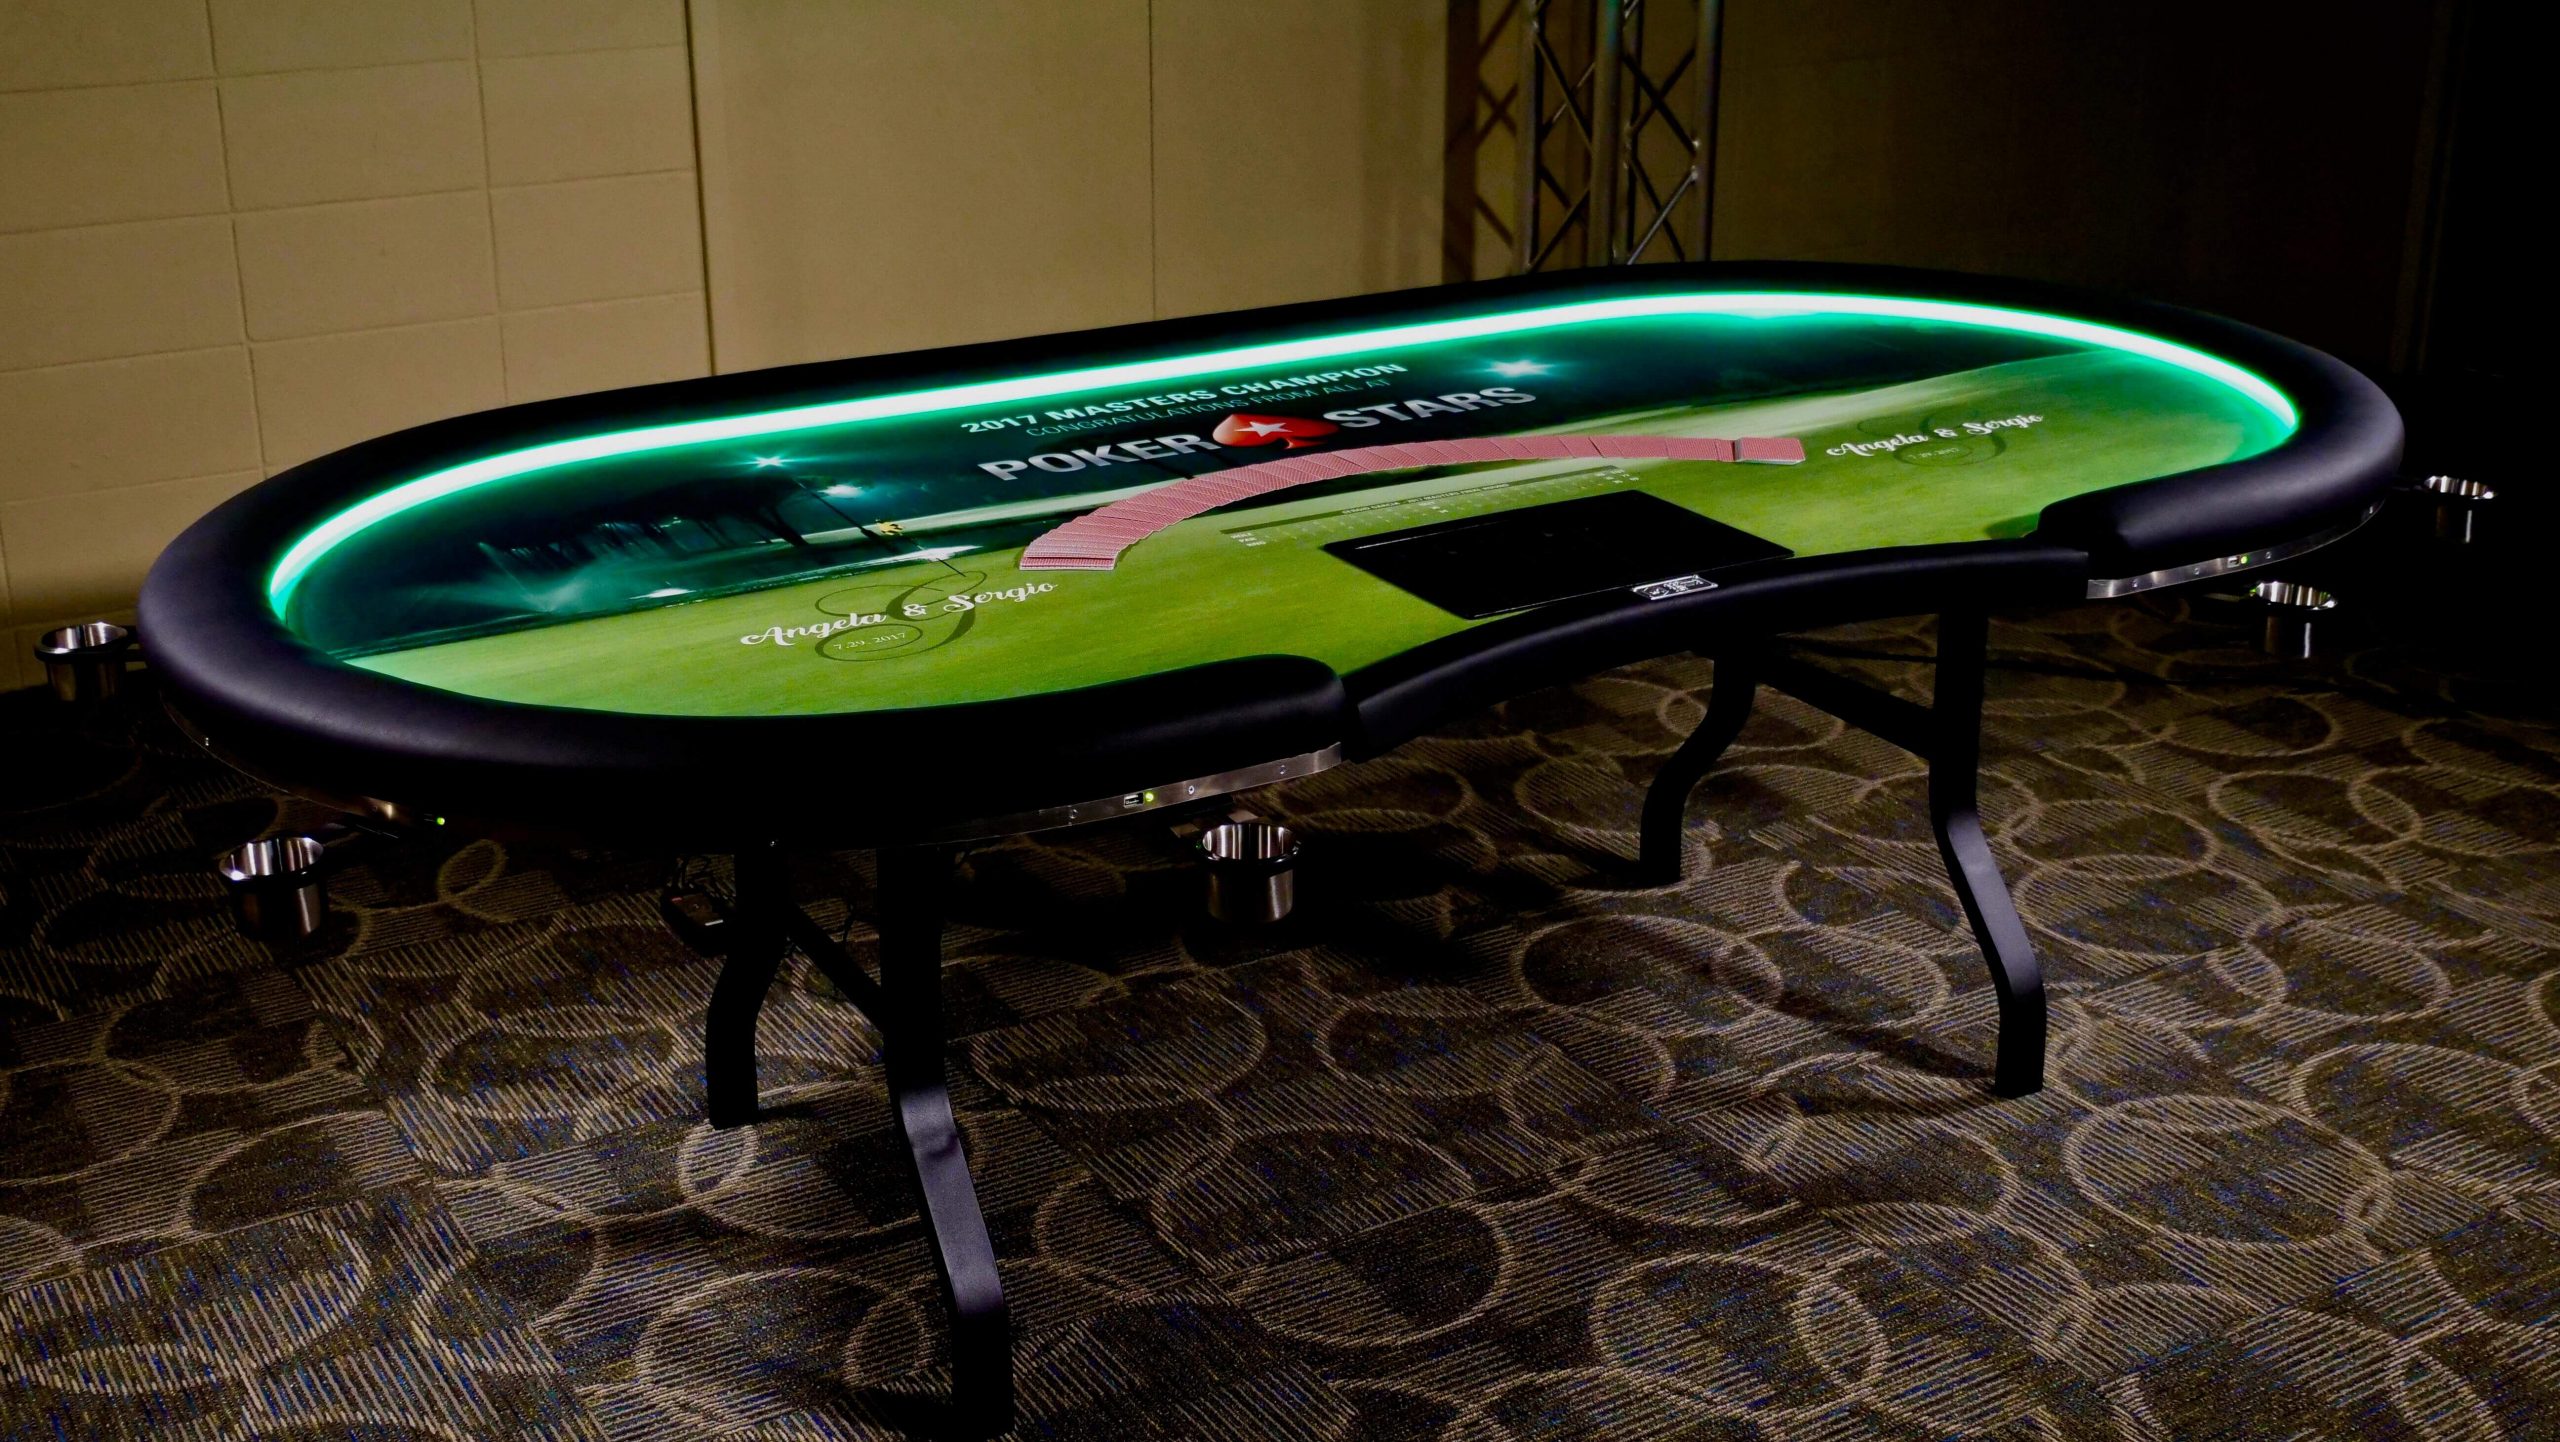 Poker table with a custom-made felt top image.